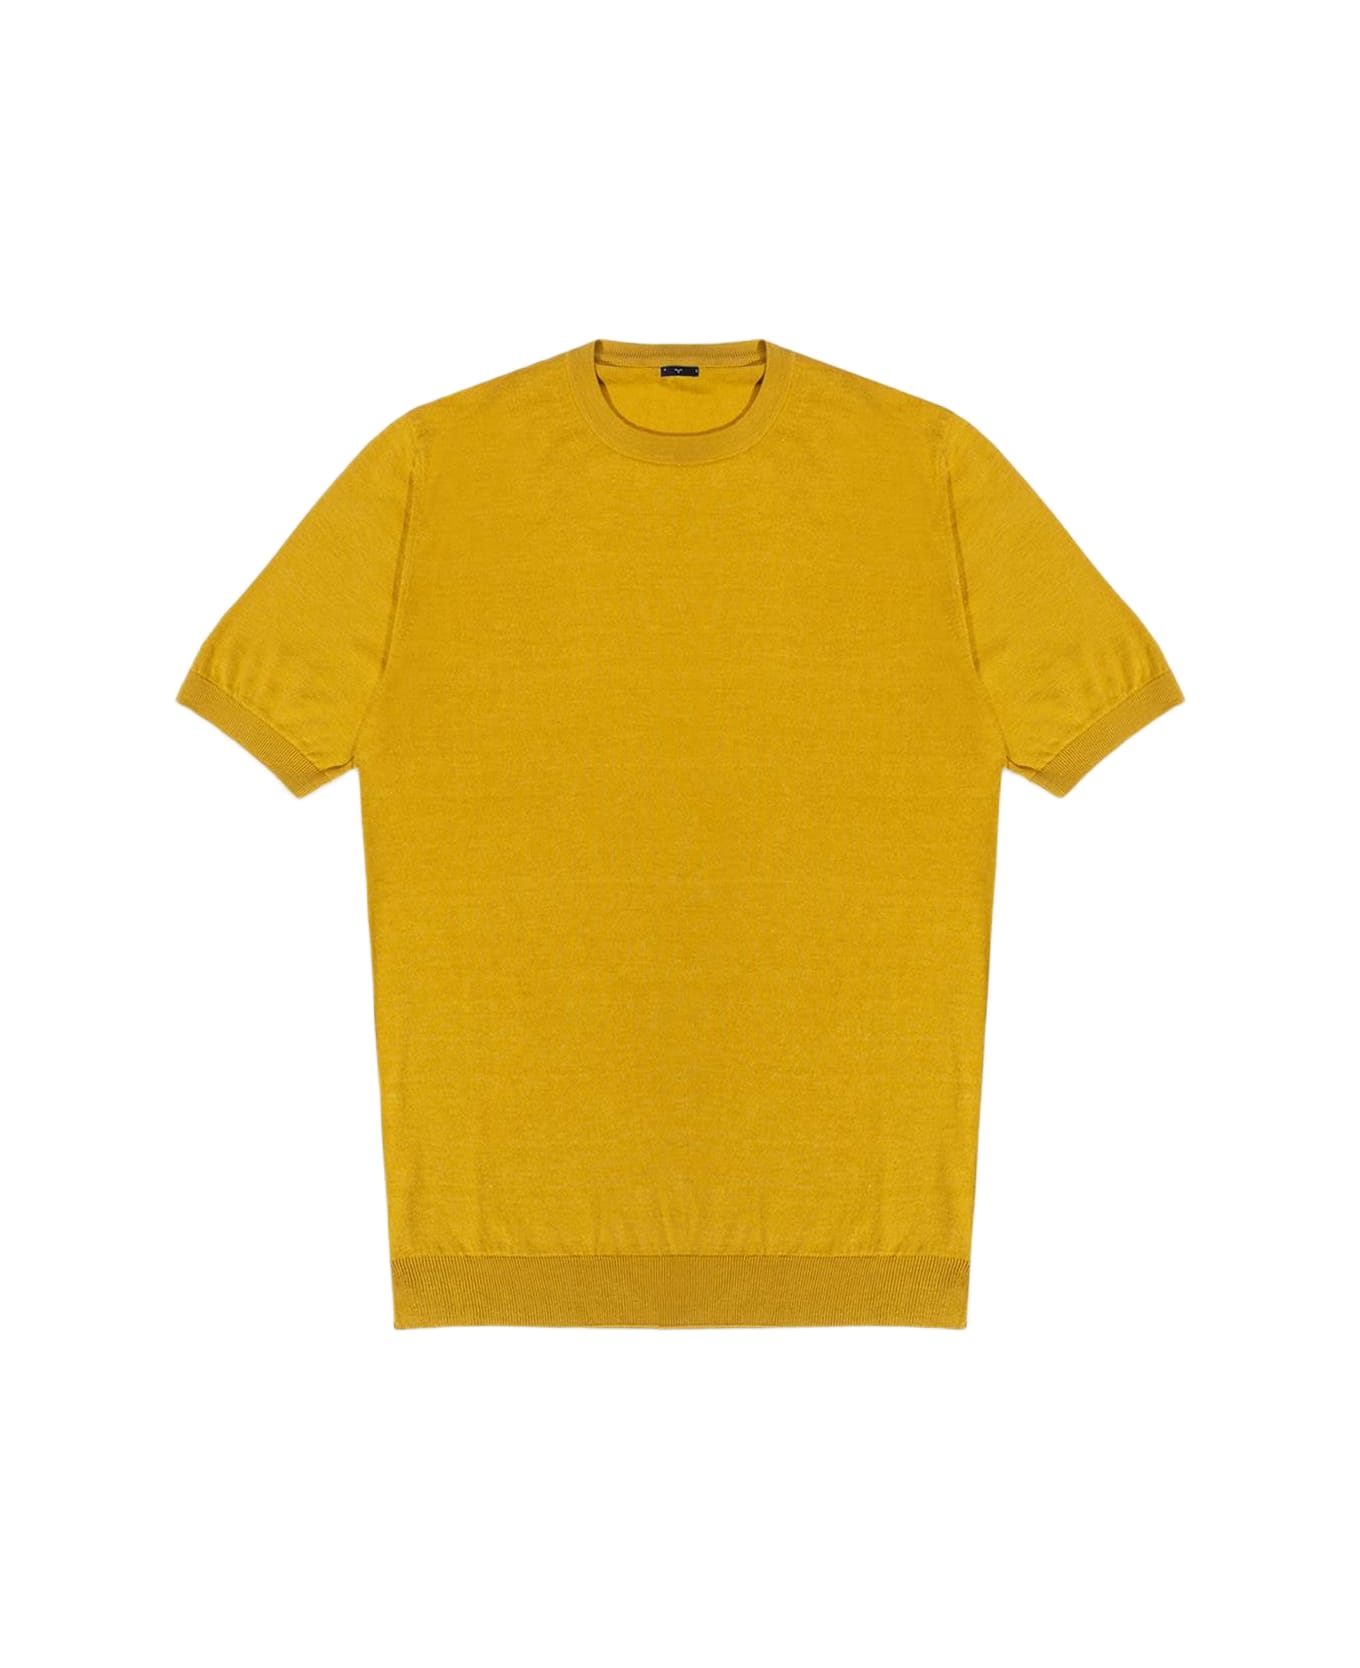 Larusmiani 'roquebrune' Crewneck Sweater - Yellow シャツ